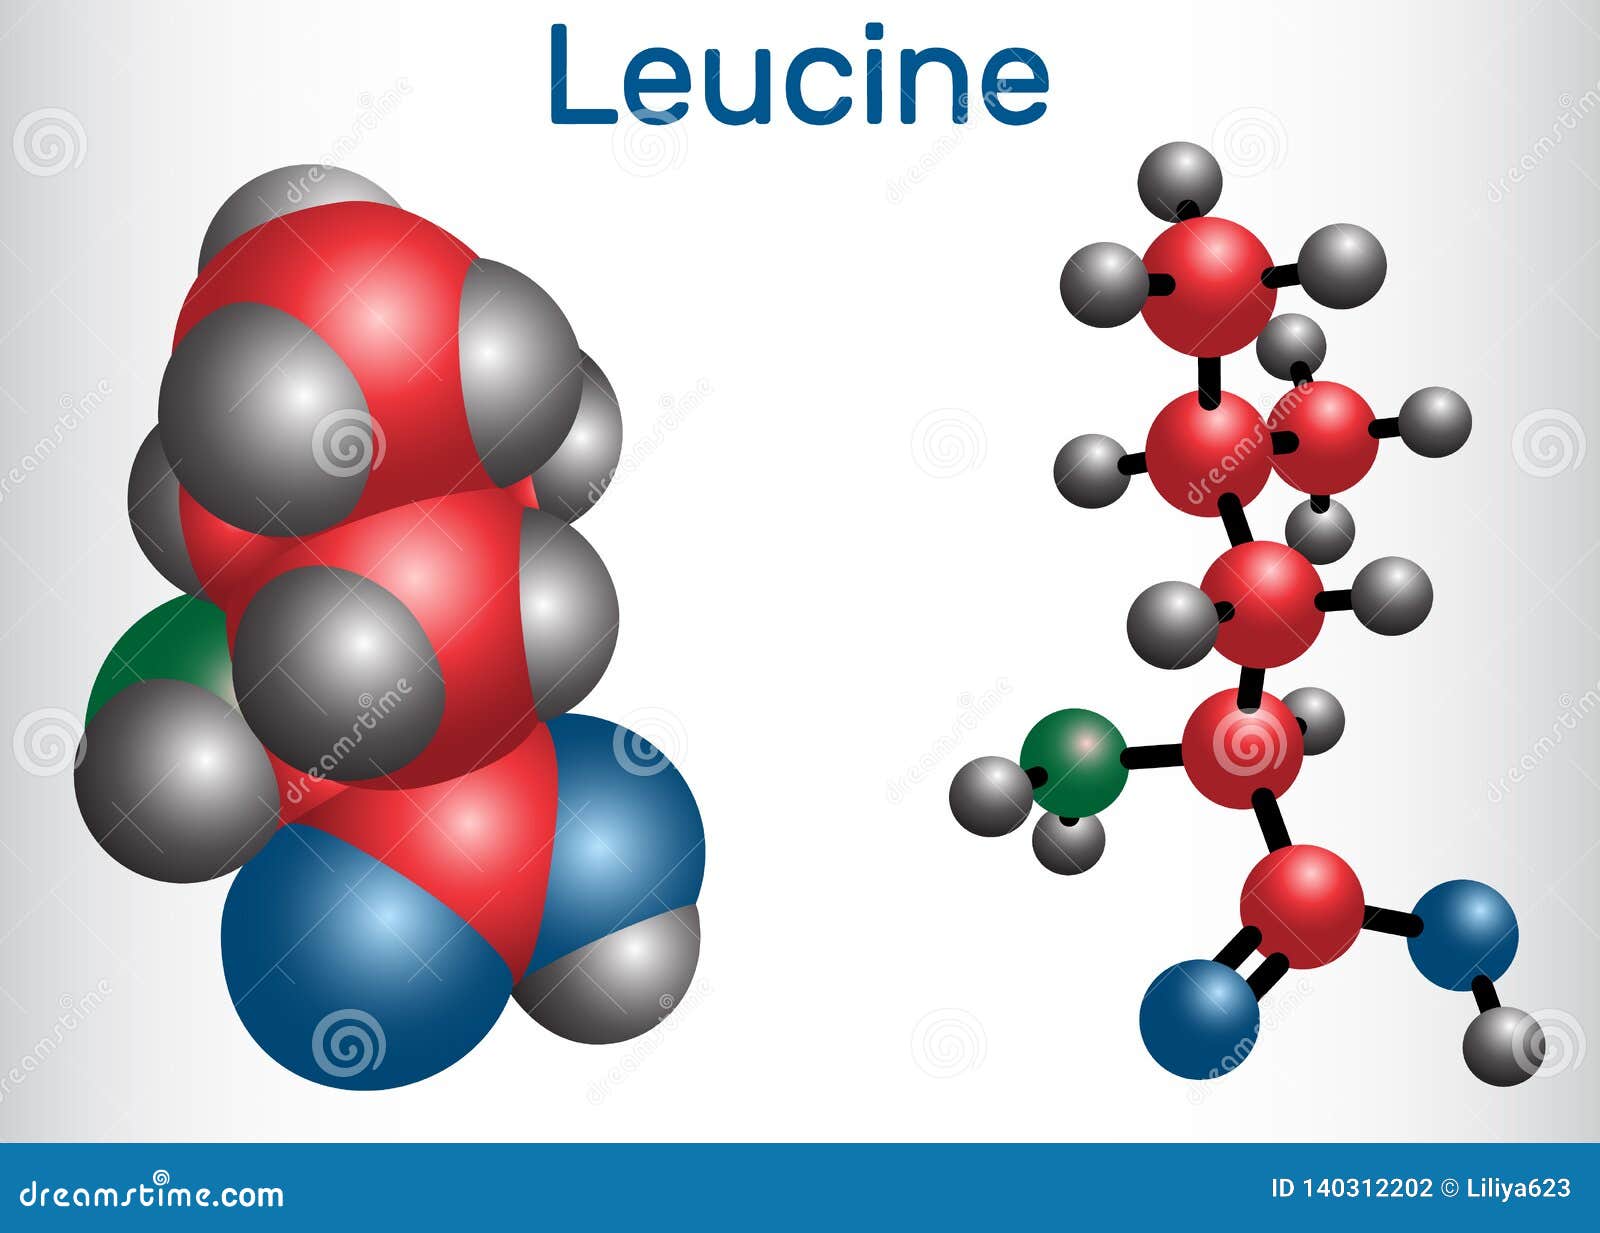 leucine l- leucine, leu, l molecule. it is essential amino acid. molecule model